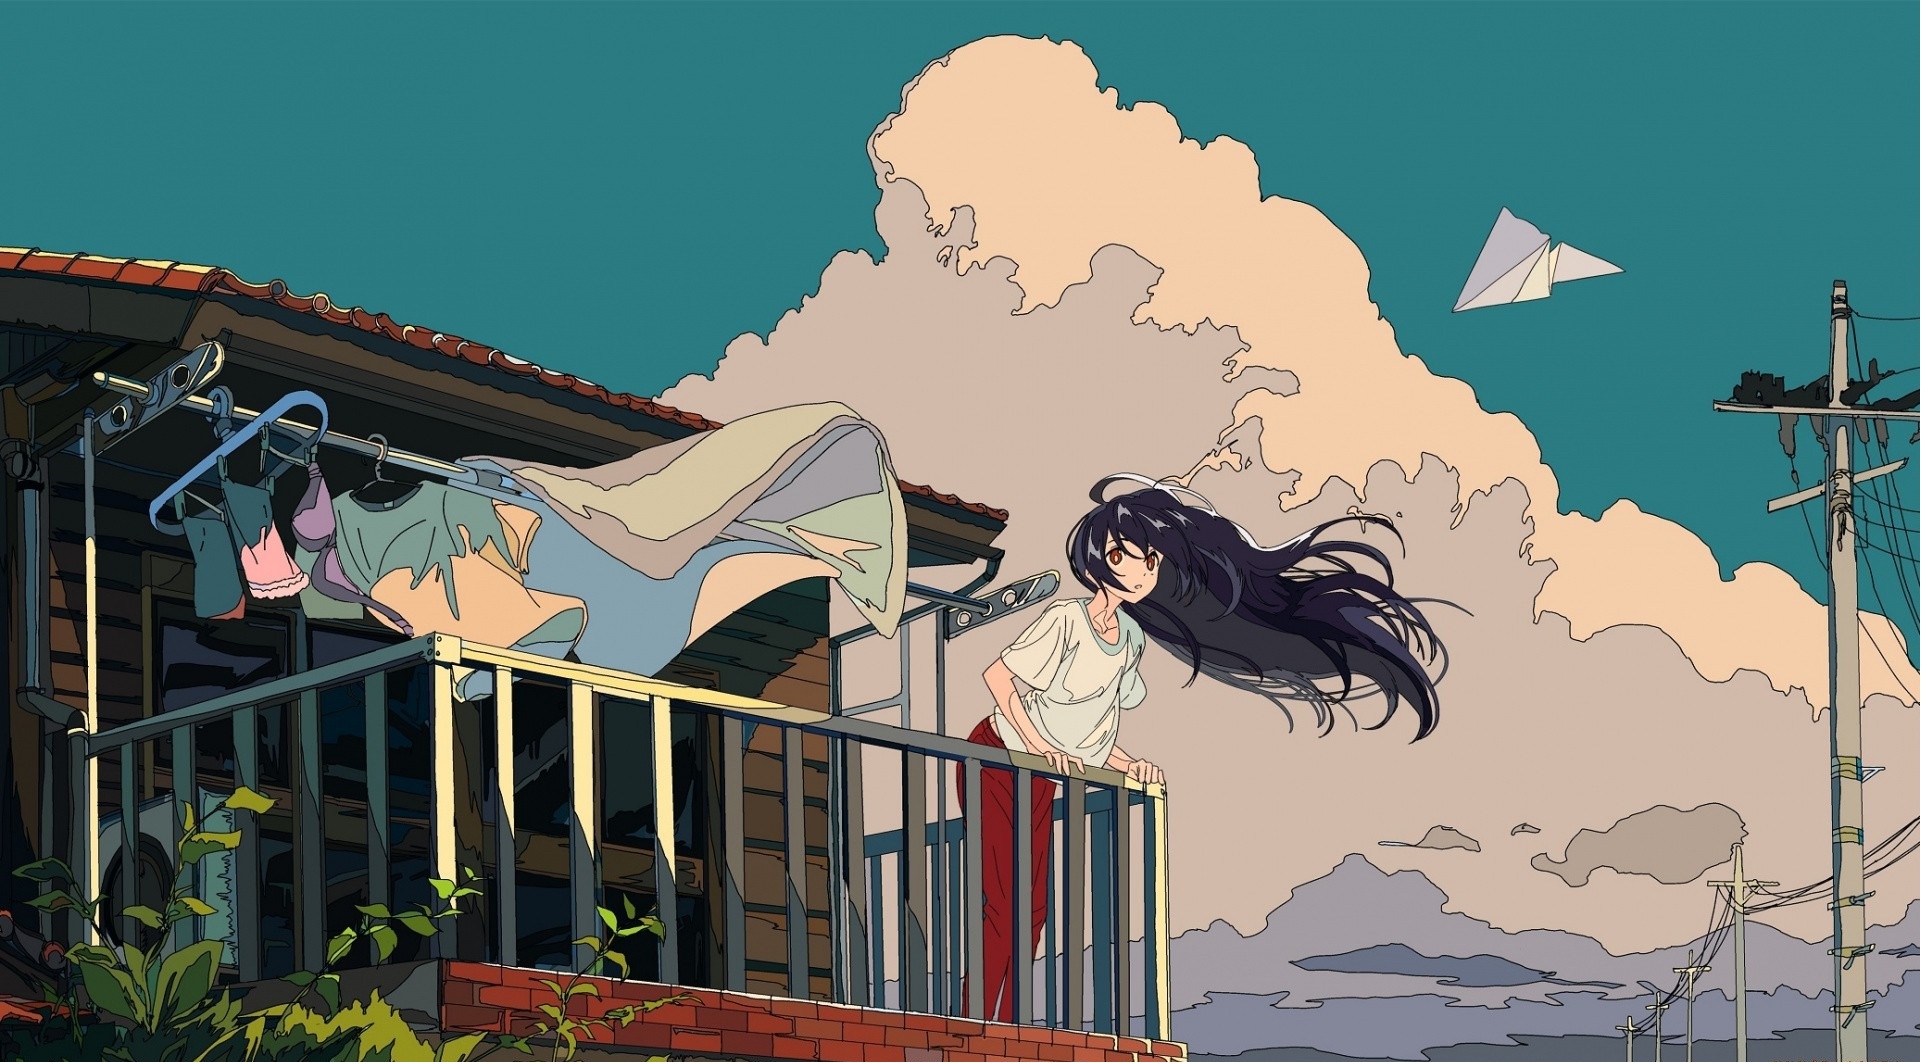 Anime Aesthetic Wallpapers Desktop  PixelsTalkNet